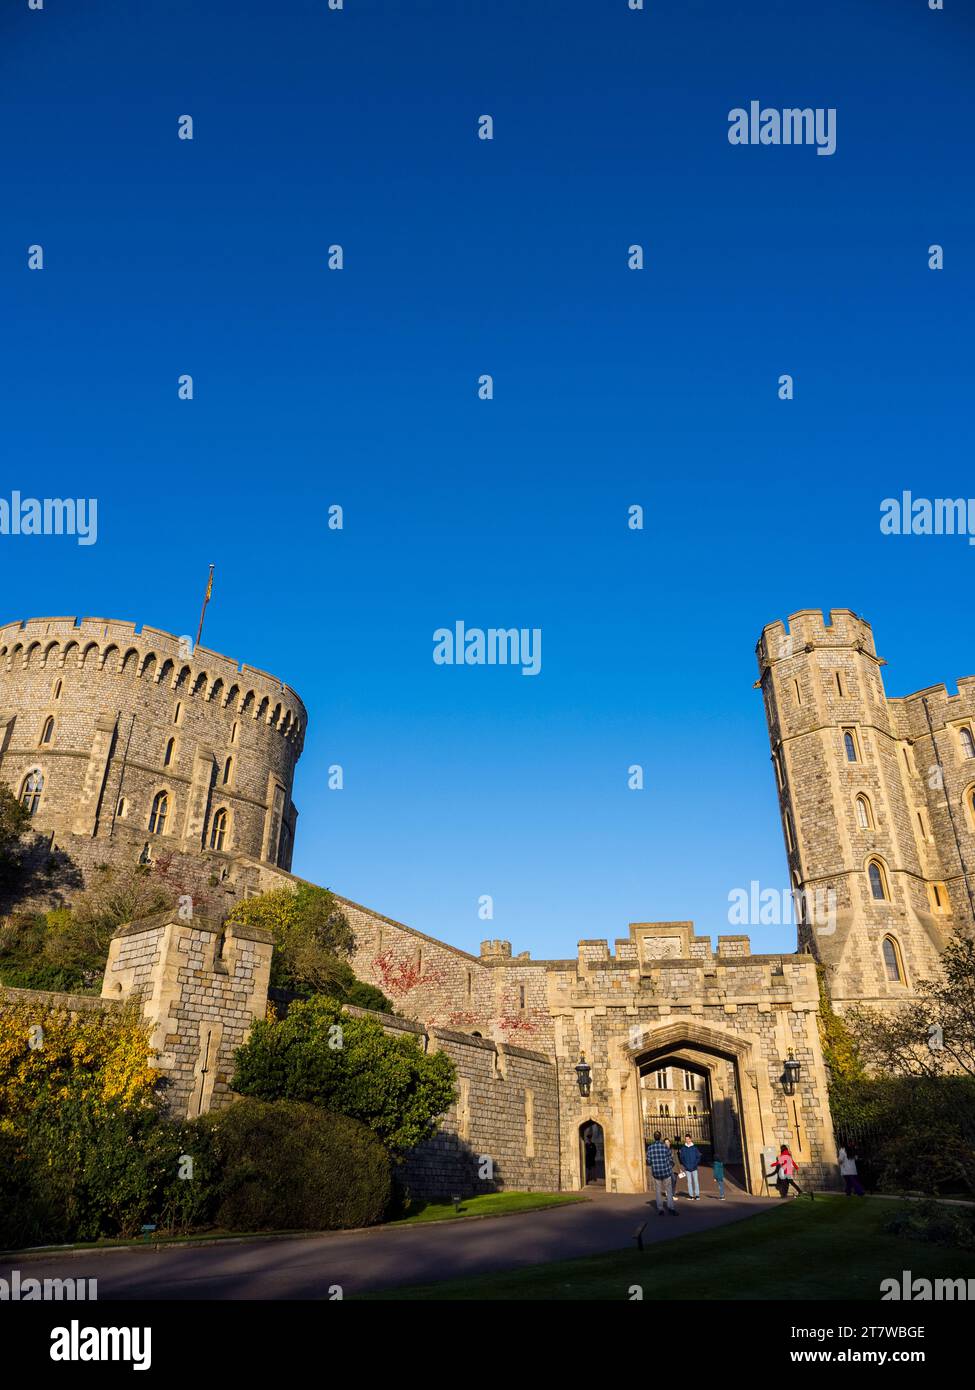 The Round Tower (Links), St Georges Gateway (Zentrum), King Edward Tower (Rechts), Windsor Castle, Windsor, Berkshire, England, GROSSBRITANNIEN, GB. Stockfoto